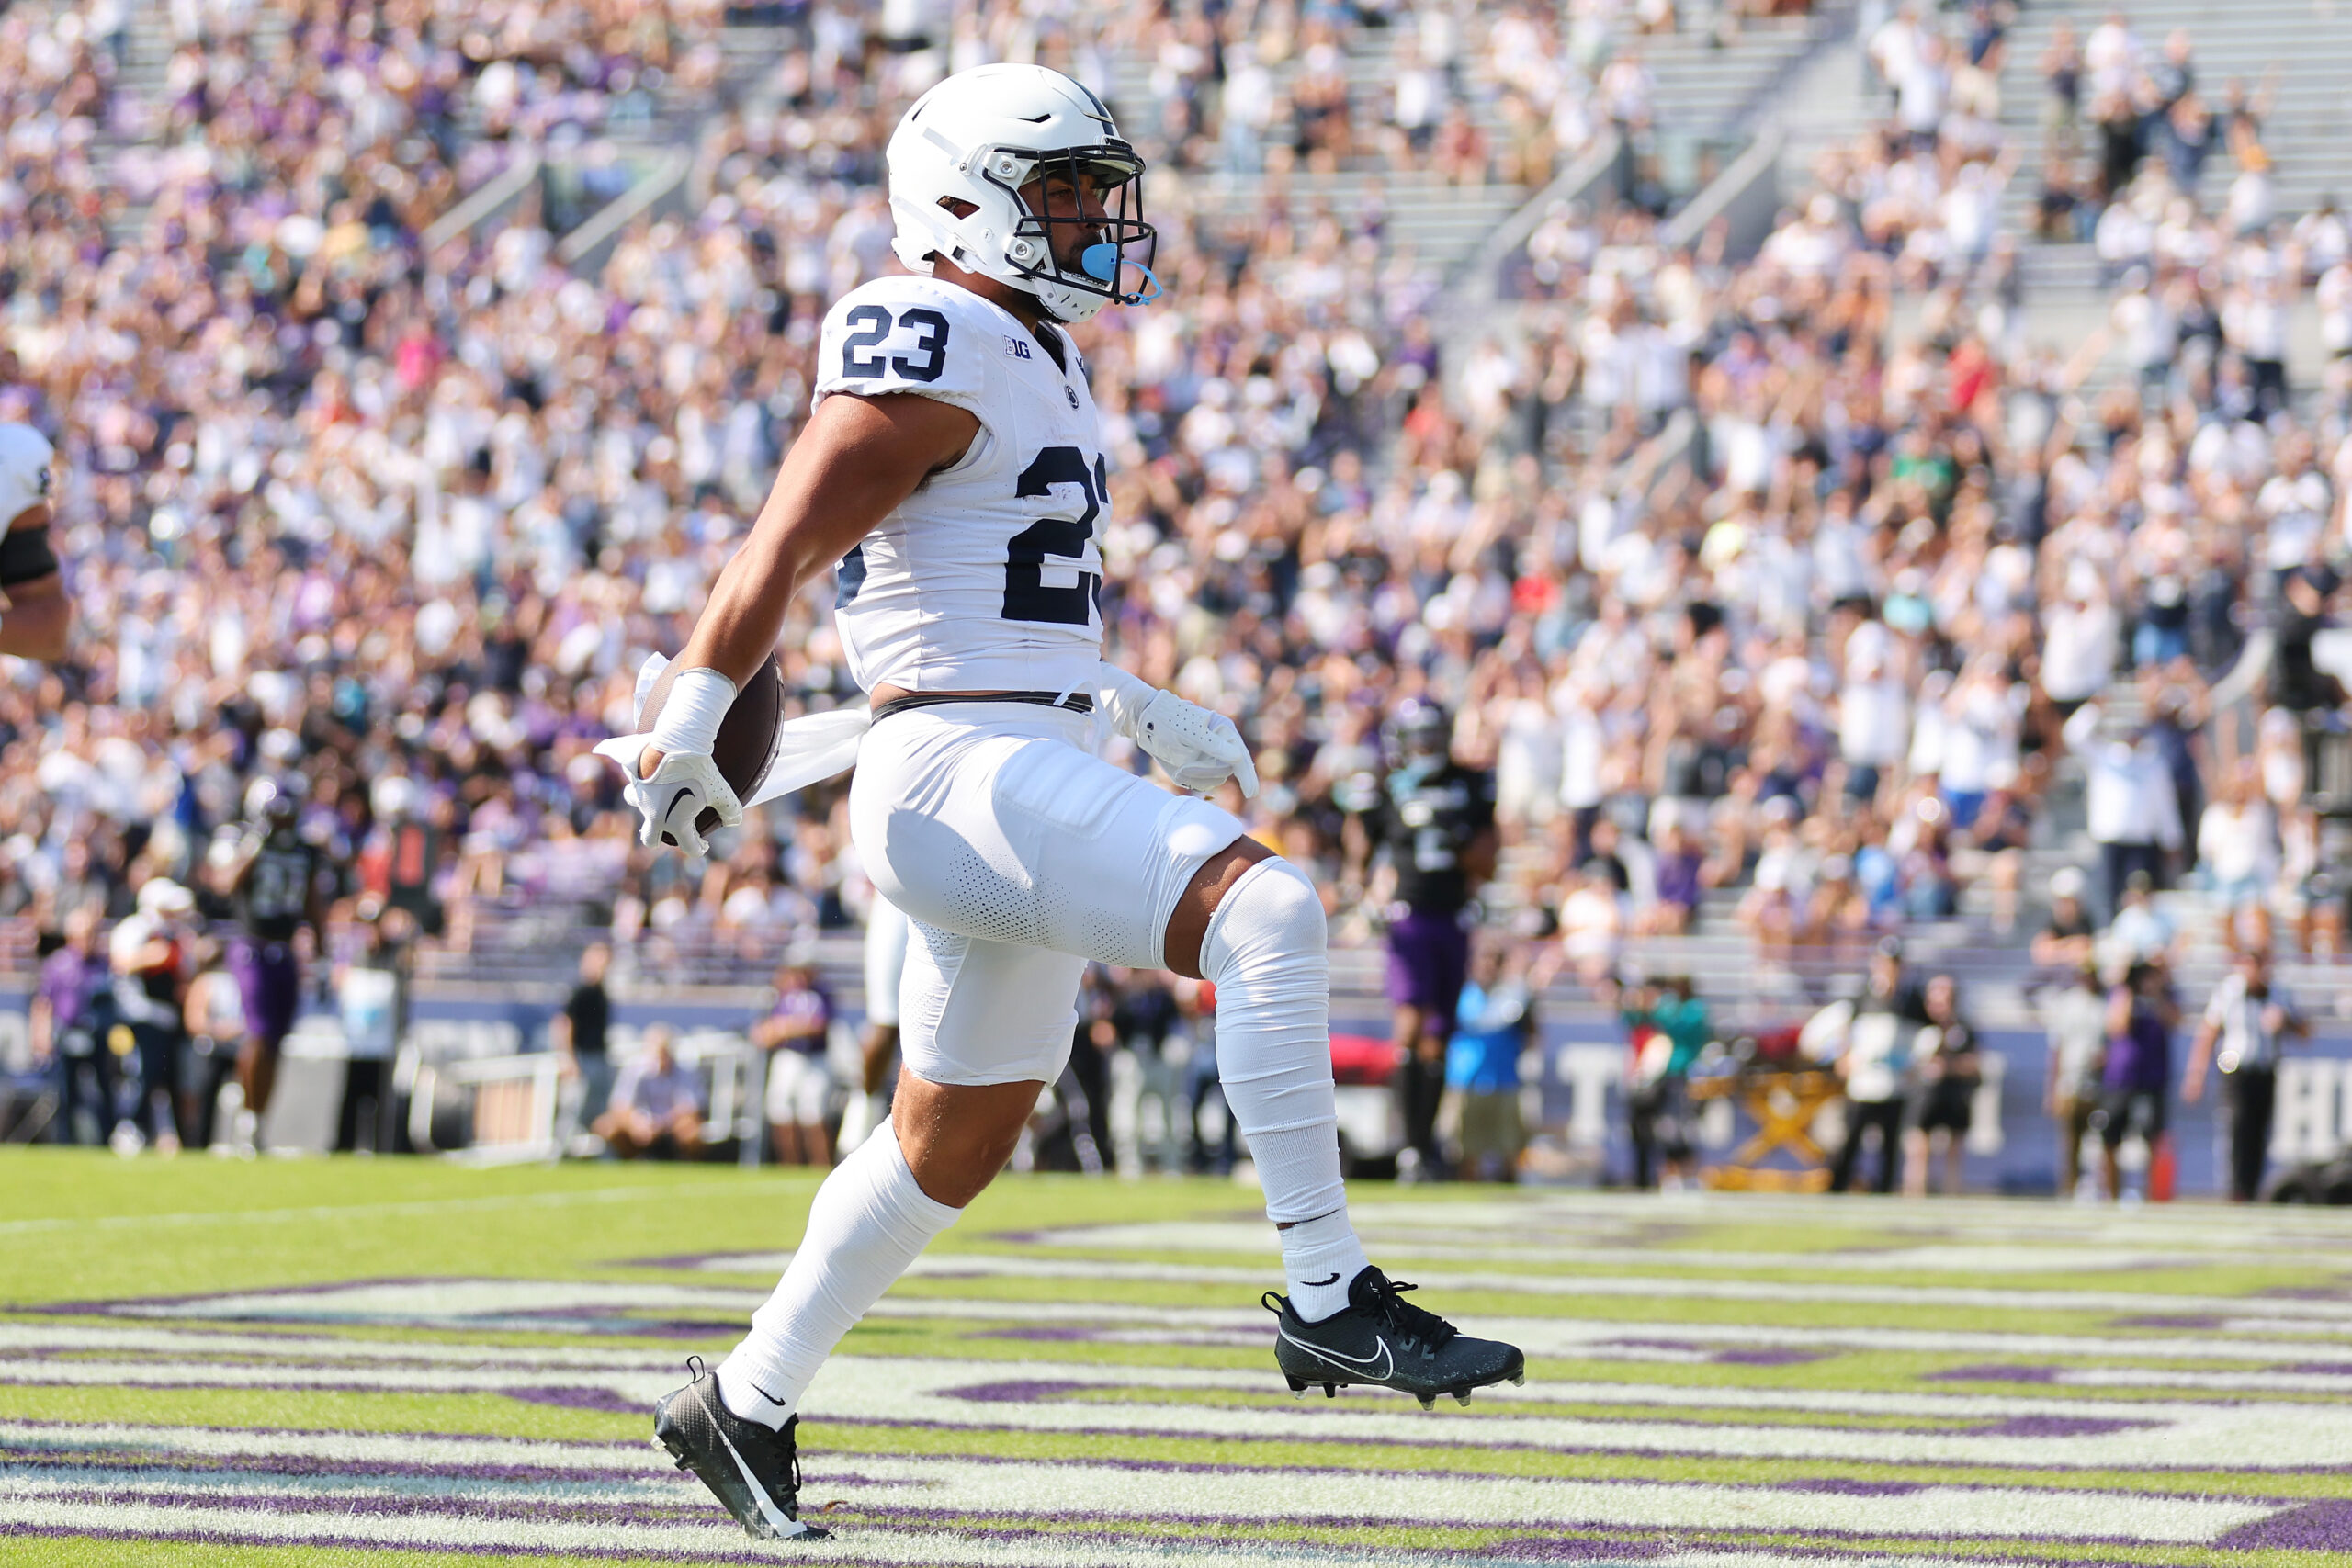 Penn State Football's Jahan Dotson returns punt for touchdown (VIDEO)